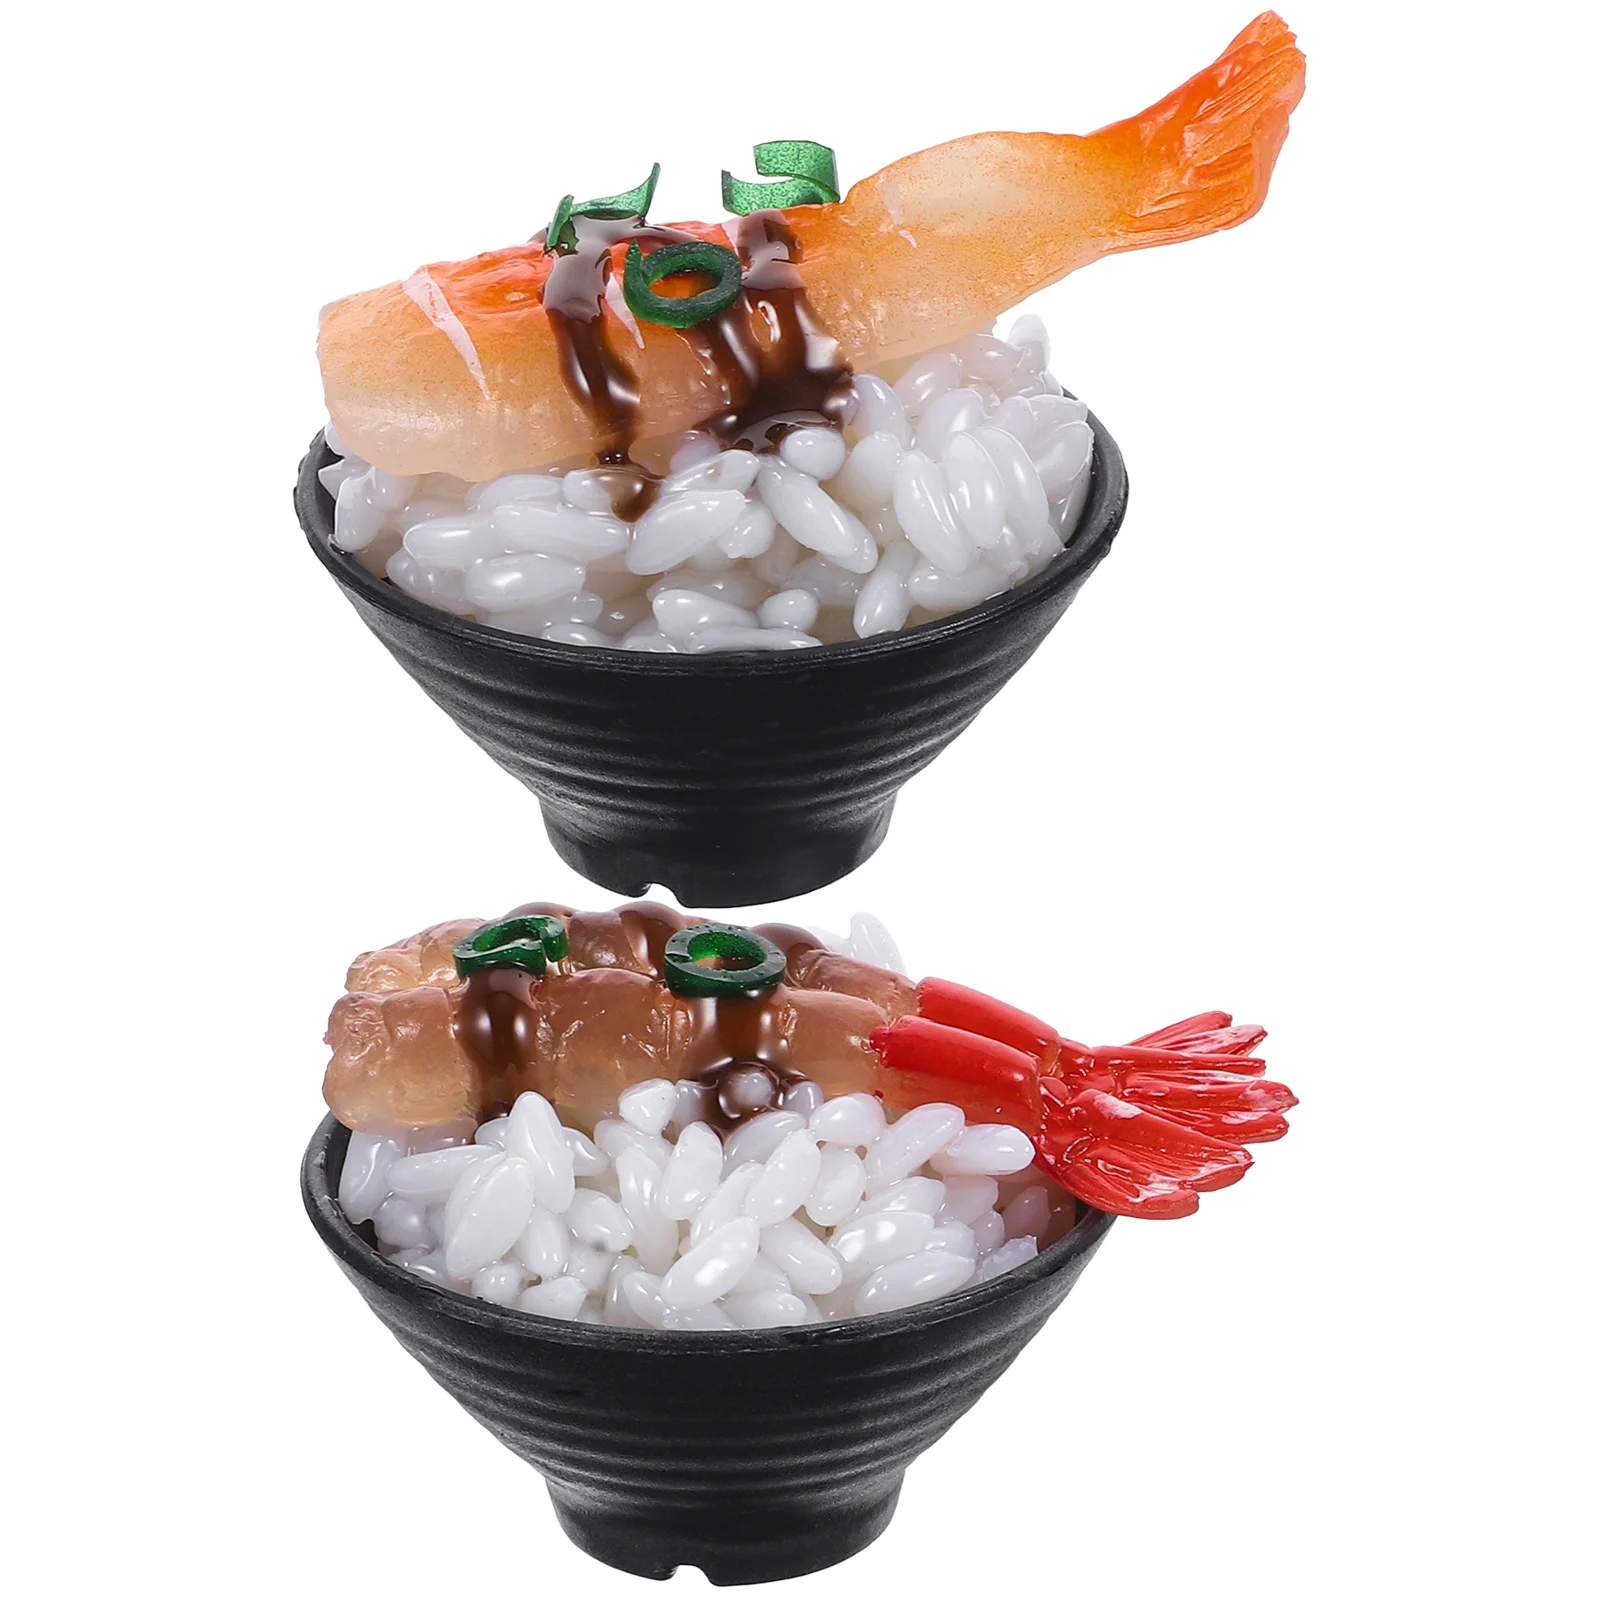 

2 Pcs Simulated Sushi Rice Rayan Toys Kids Cupcake Model Food Play Sushi Toy Pvc Fake Sushi Sample Child